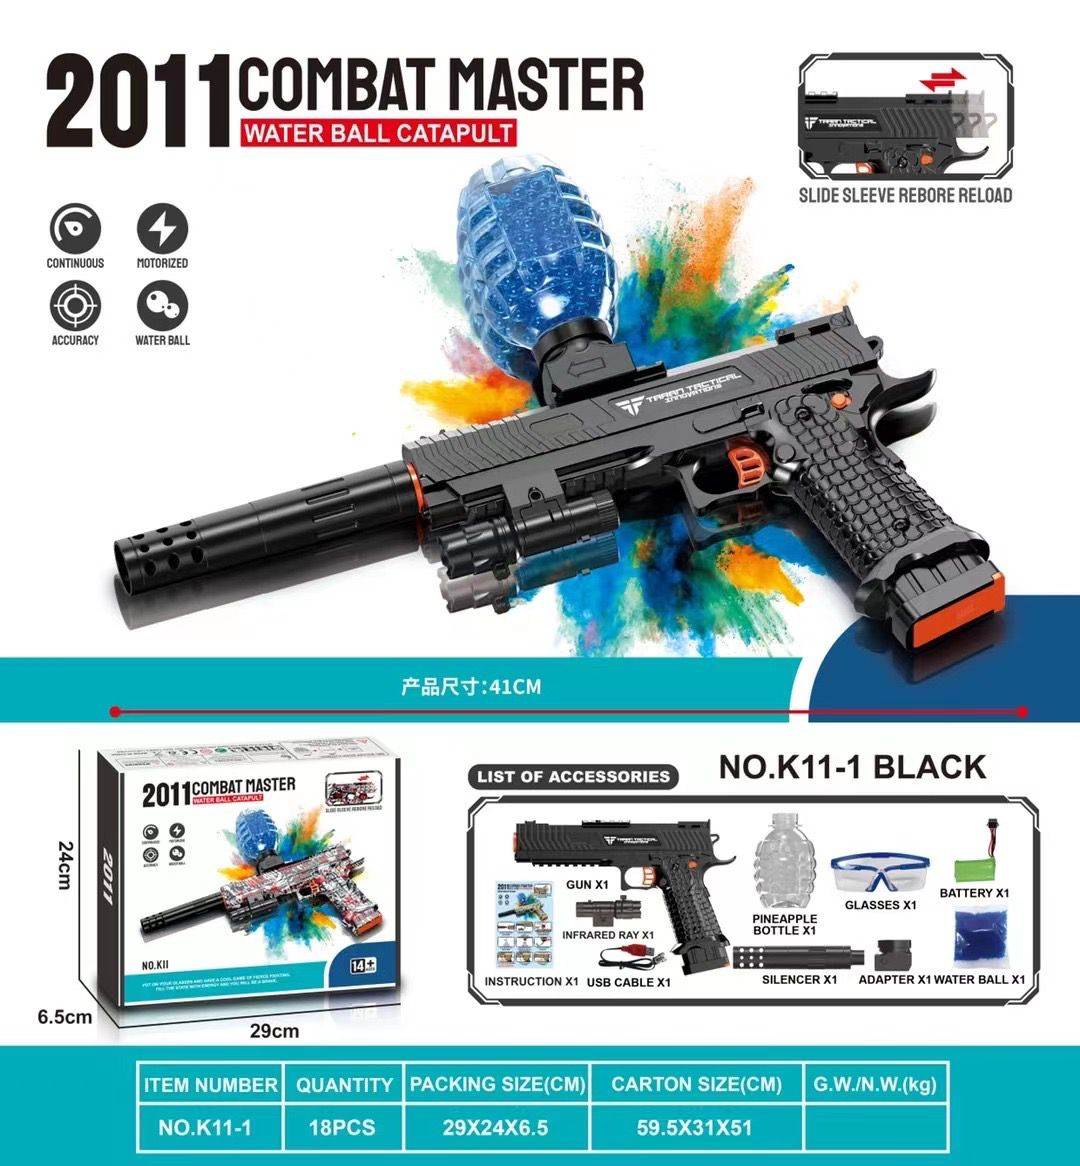 New 2011 Combat Master Gel blaster - BOOST TOYS